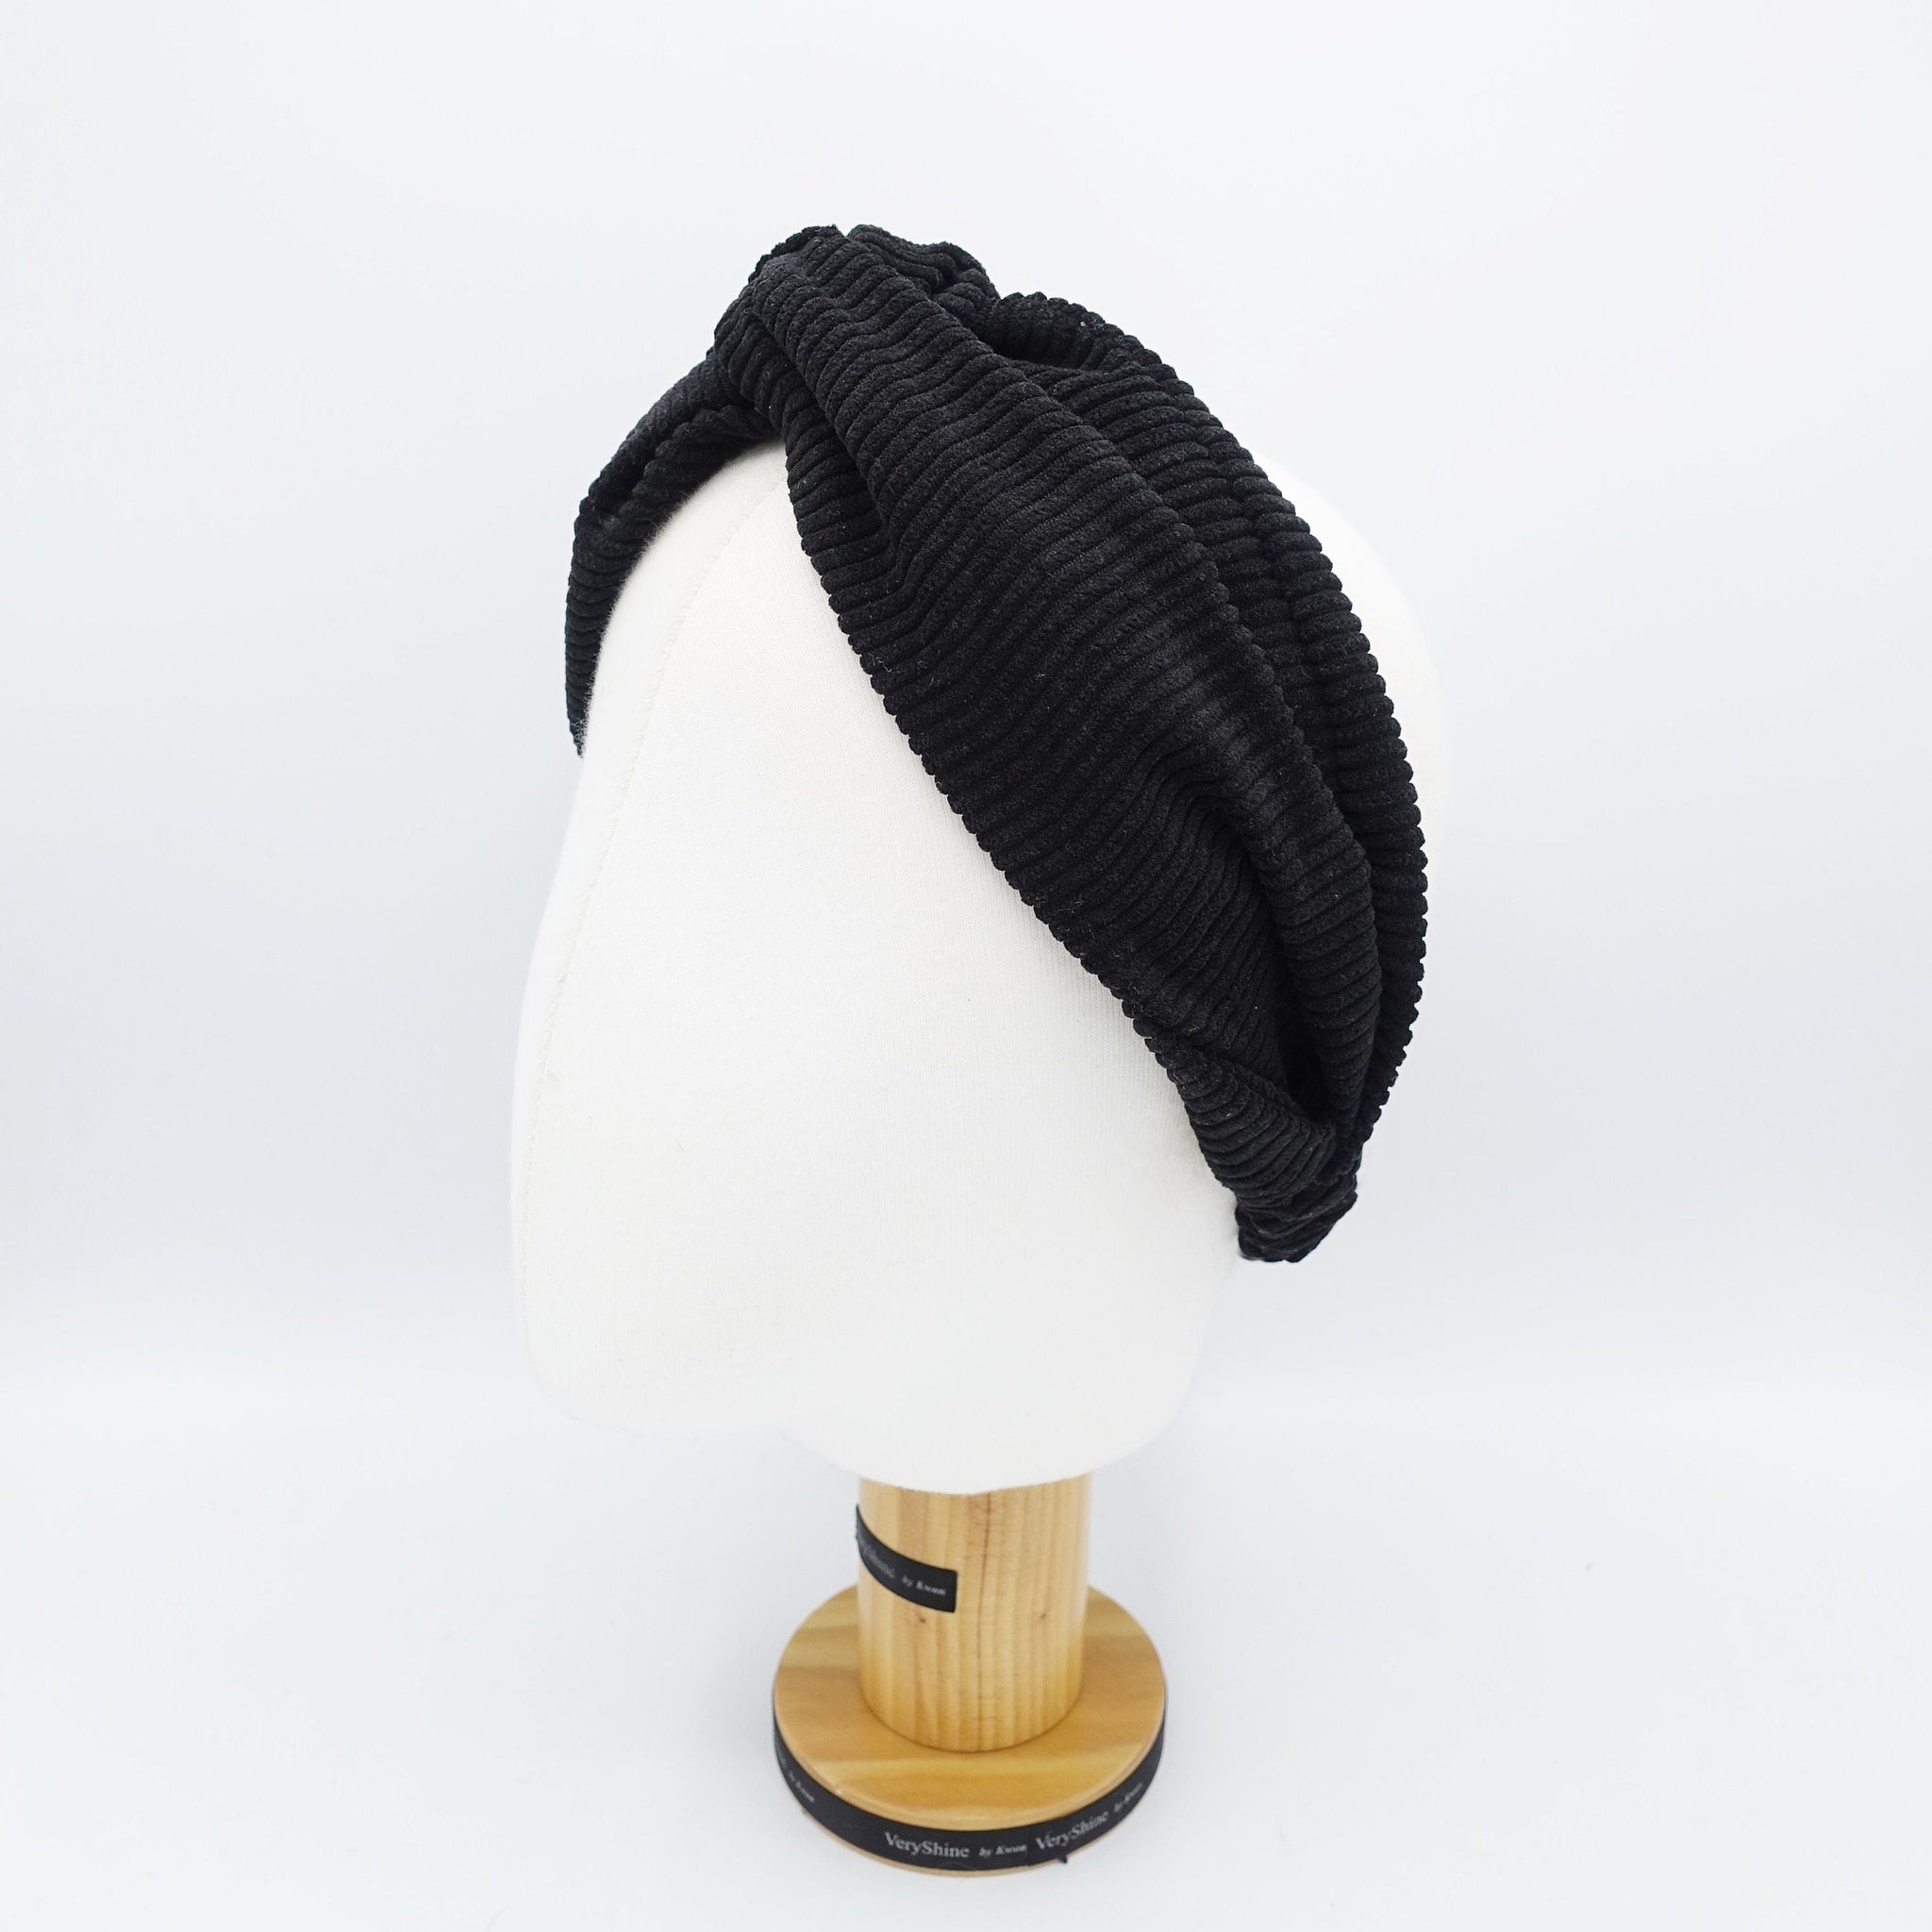 VeryShine Black corduroy cross turban headband Autumn basic casual hairband for women